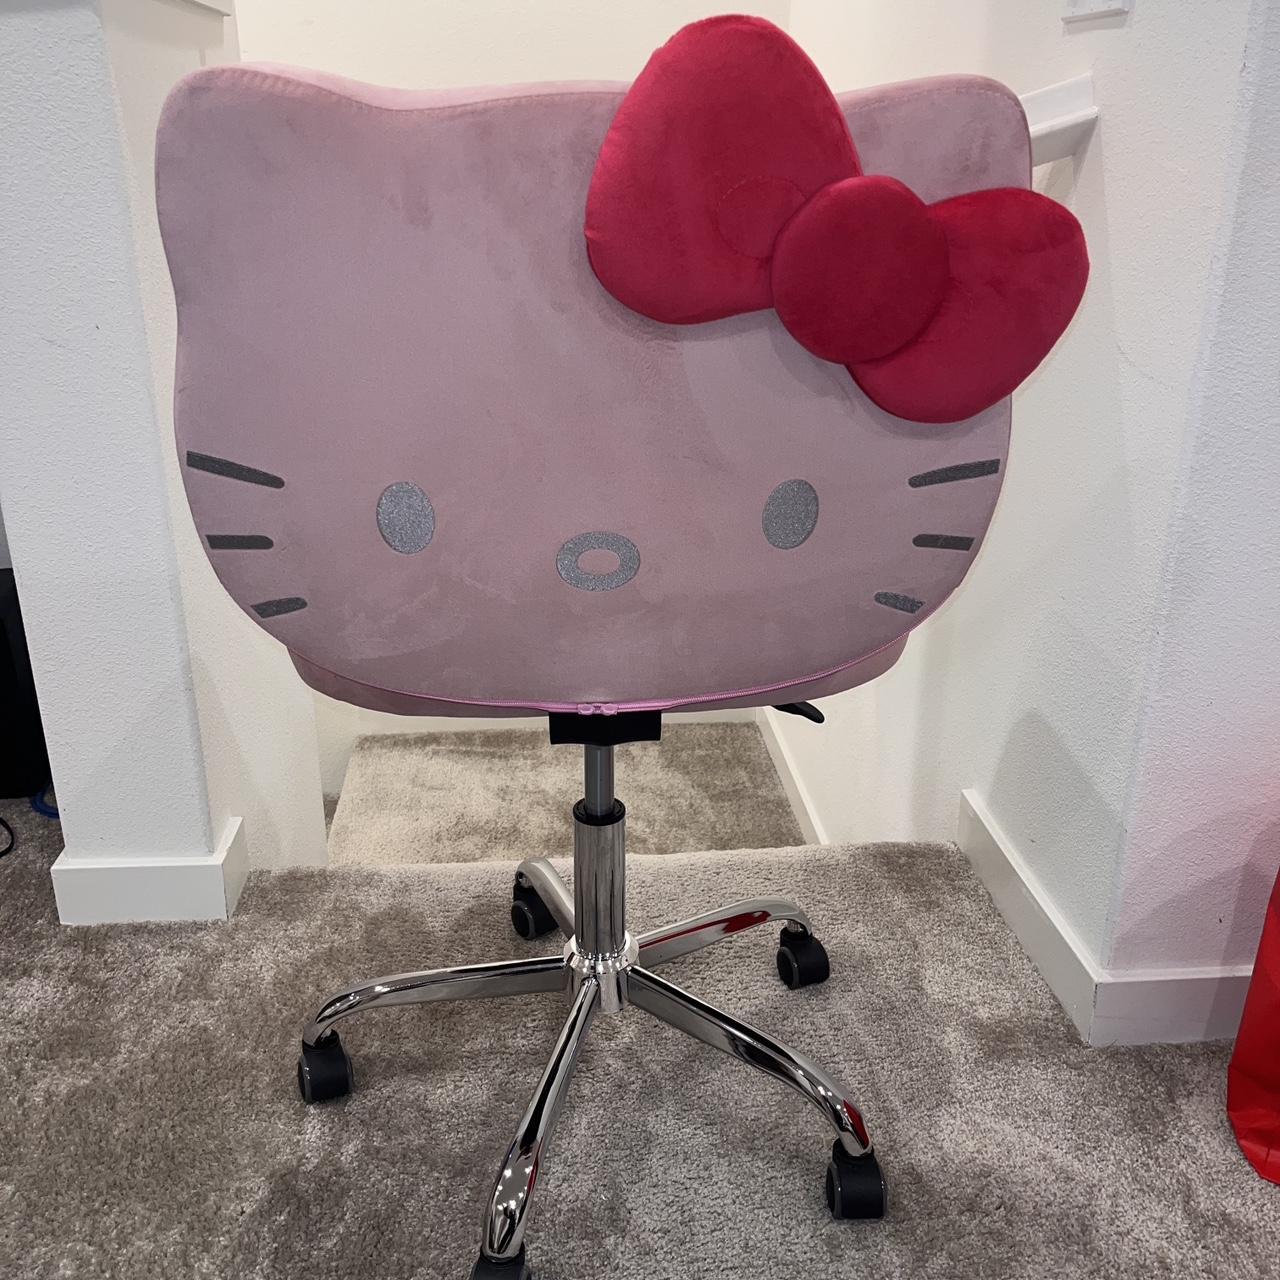 Brand new pink Hello Kitty Impressions Vanity Chair. - Depop